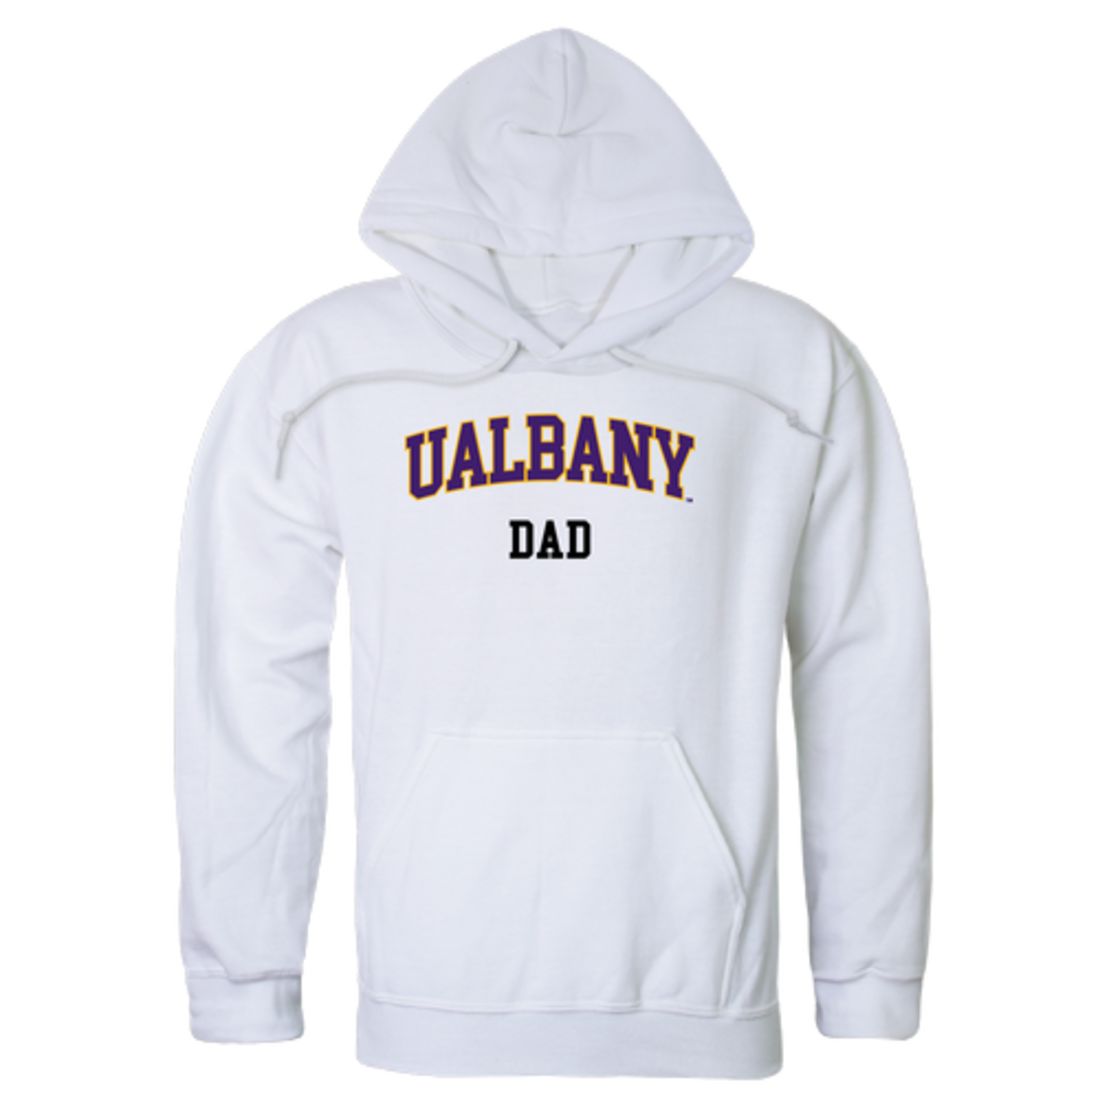 UAlbany University of Albany The Great Danes Dad Fleece Hoodie Sweatshirts Heather Charcoal-Campus-Wardrobe